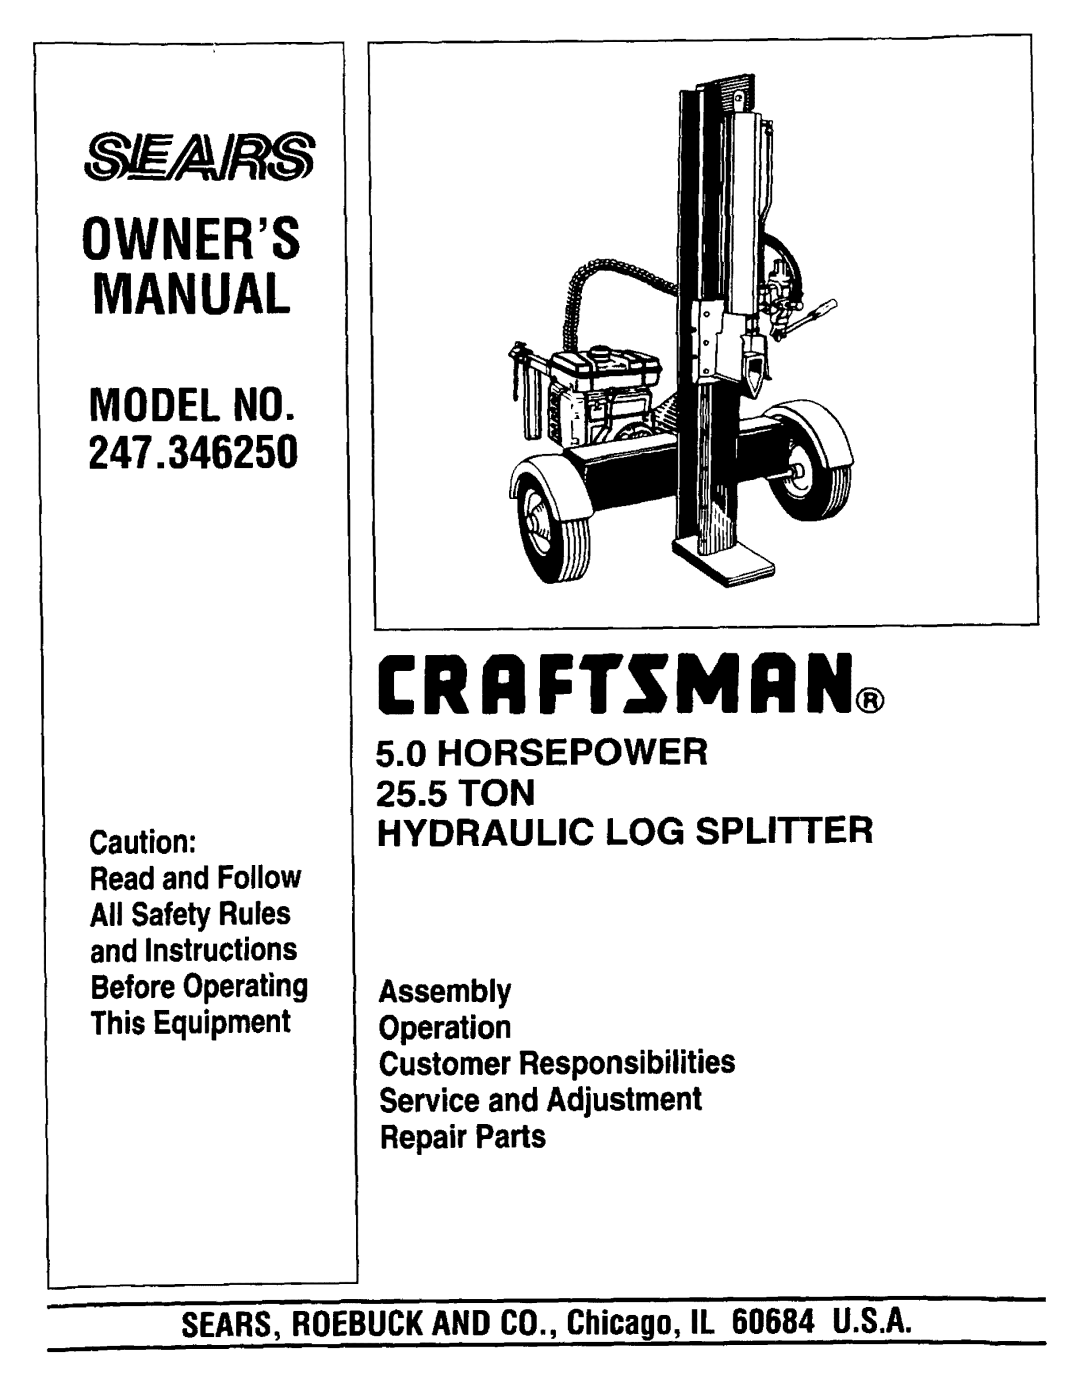 Sears owner manual Crrftsmrn, OWNERS MANUAl, MODELNO 247.346250, Horsepower, 25.5 TON, Hydraulic Log Splitter 